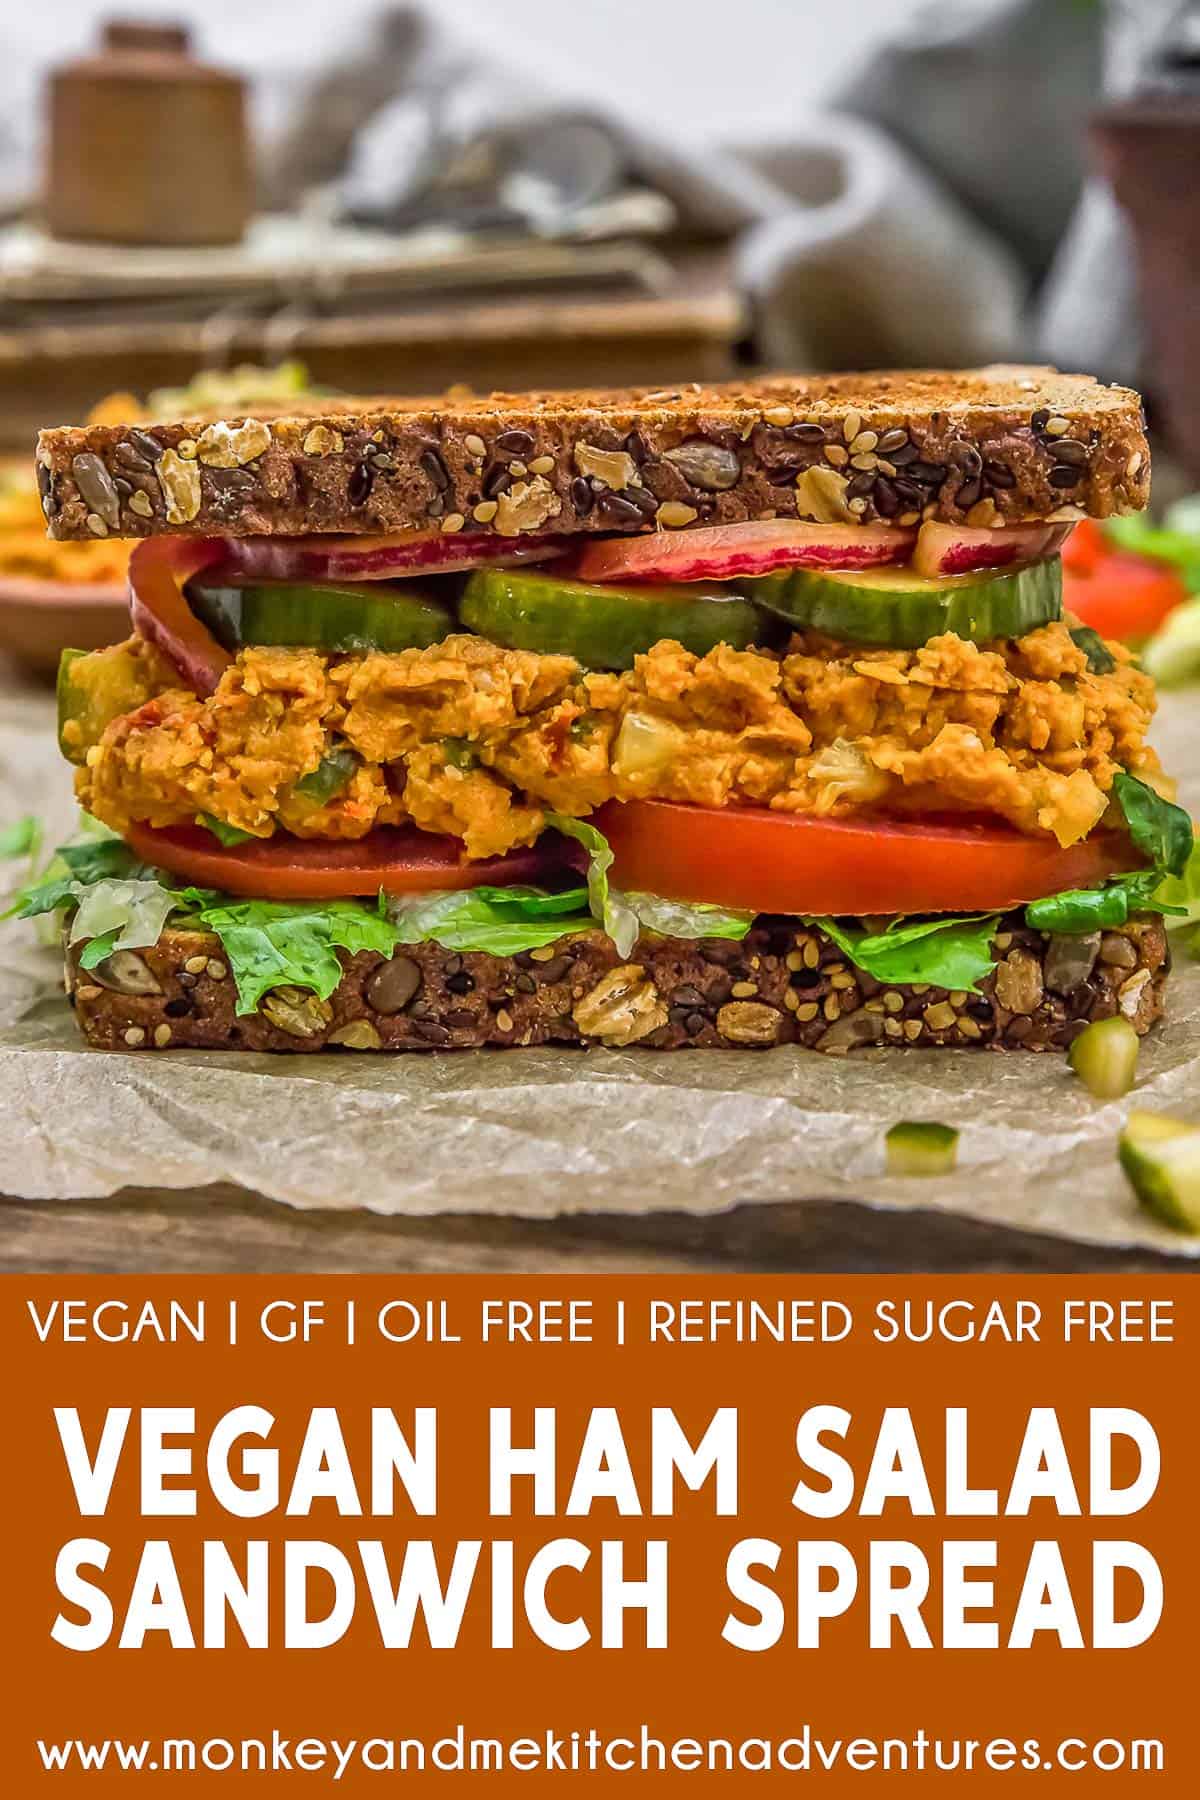 Vegan “Ham” Salad Sandwich Spread with text description